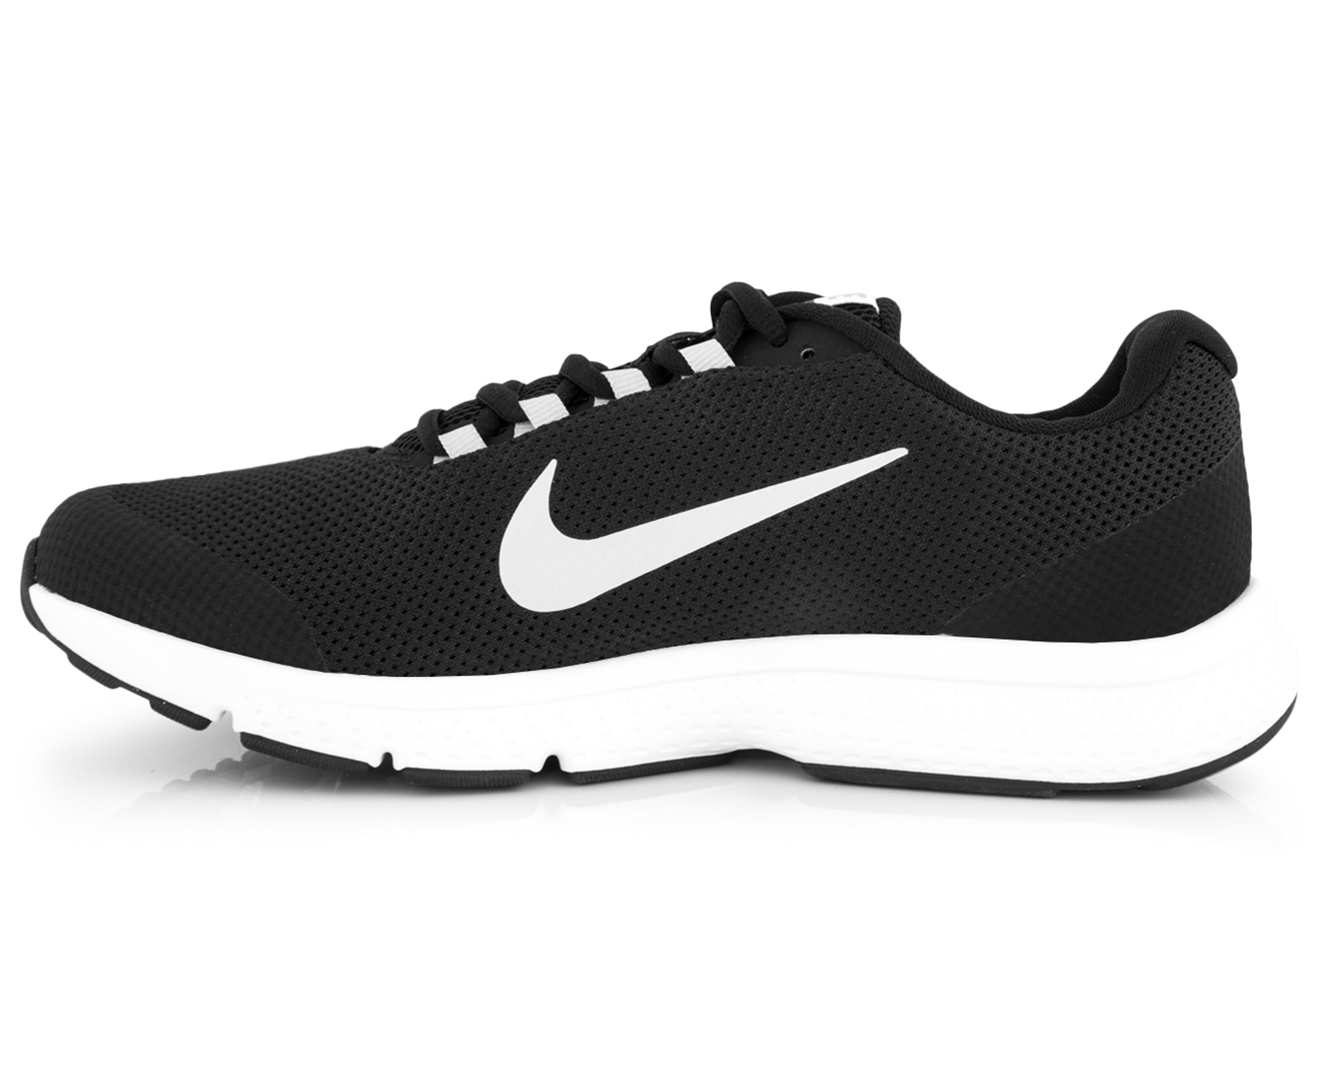 Nike Women's Run all day Shoe - Black/White/Grey | Catch.com.au